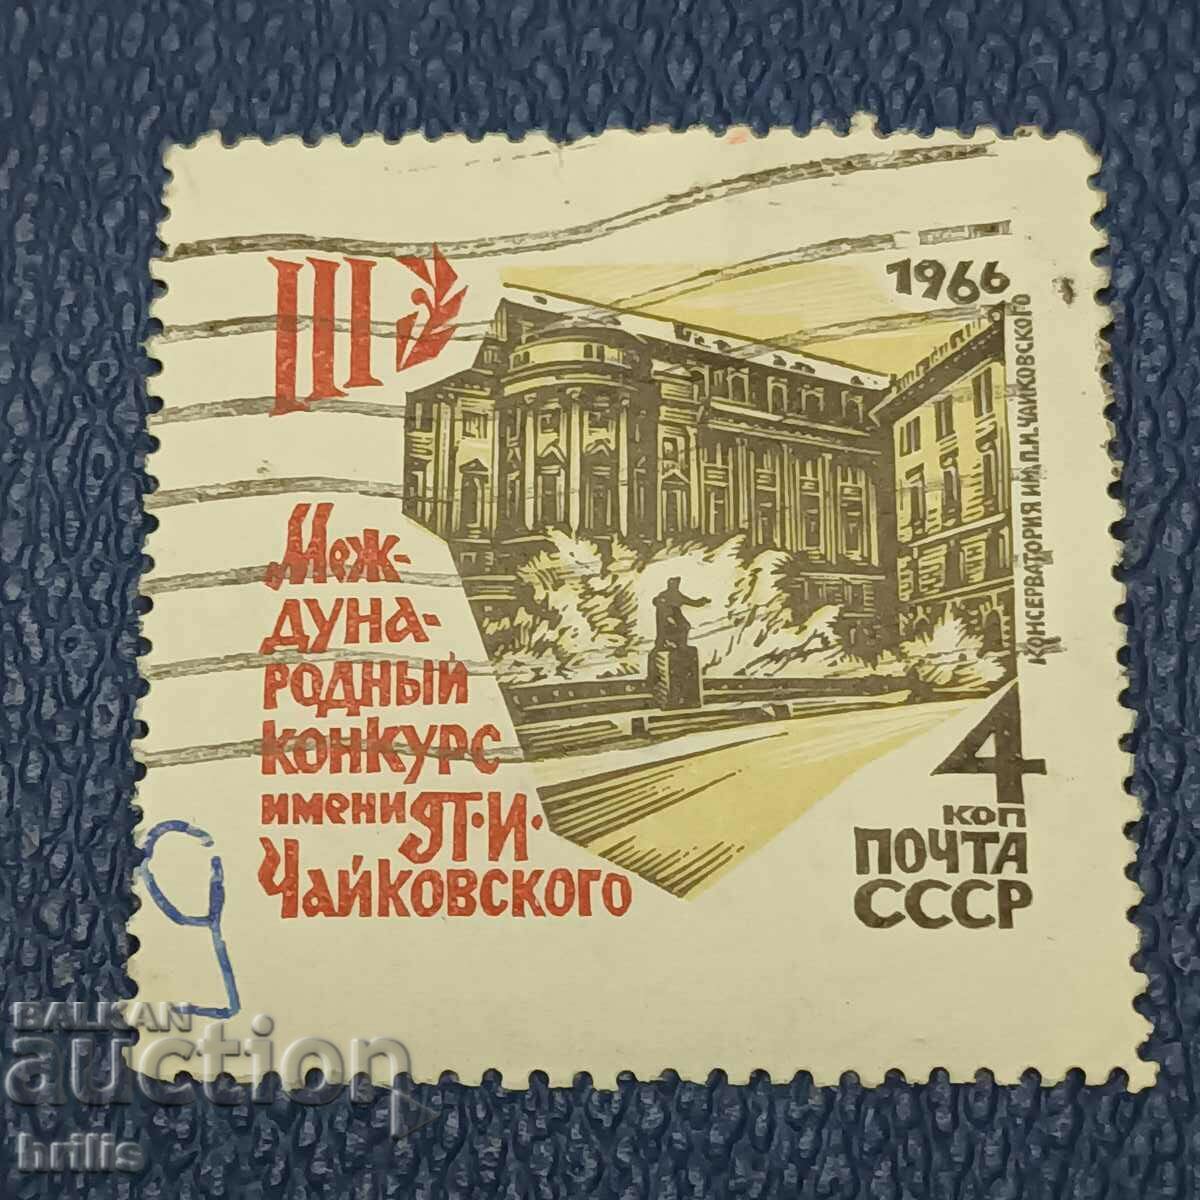 URSS 1966 - a 3-a competiție Ceaikovski